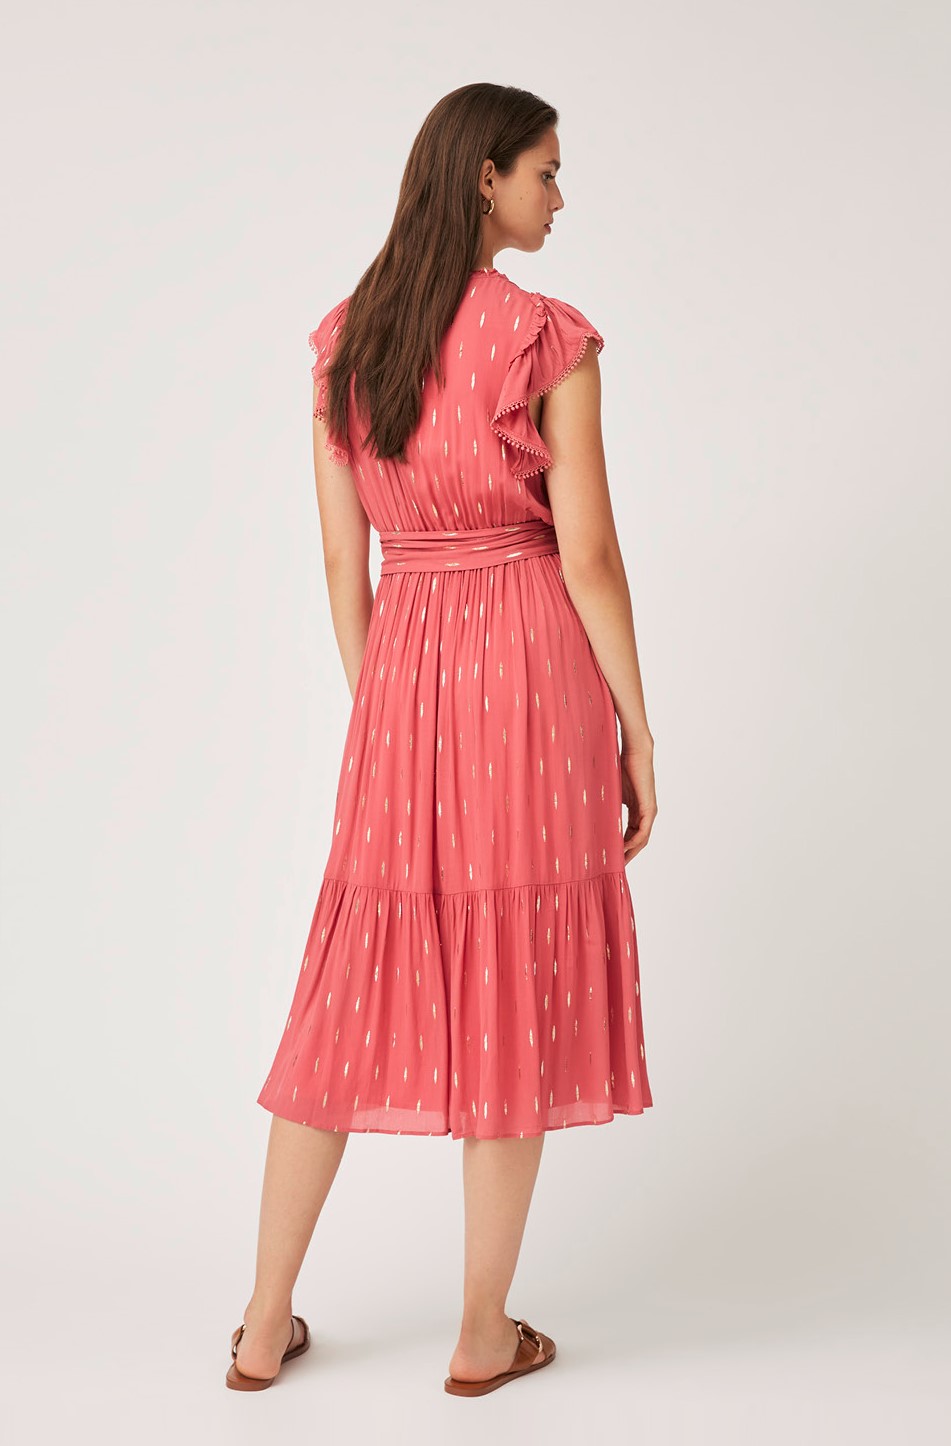 raspberry dress 3